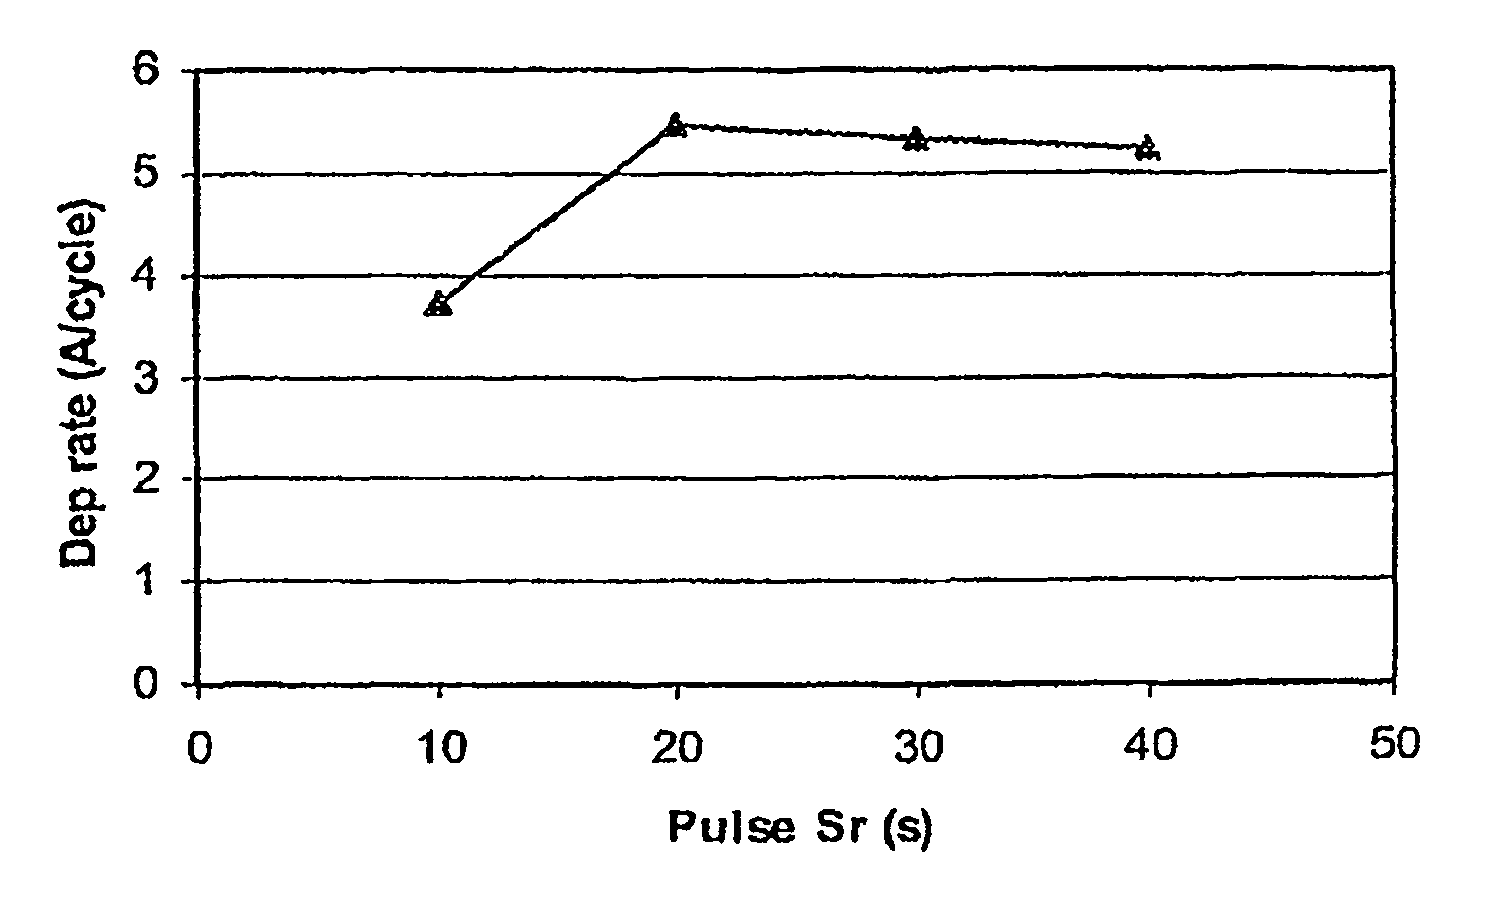 Use of ruthenium tetroxide as a precursor and reactant for thin film depositions